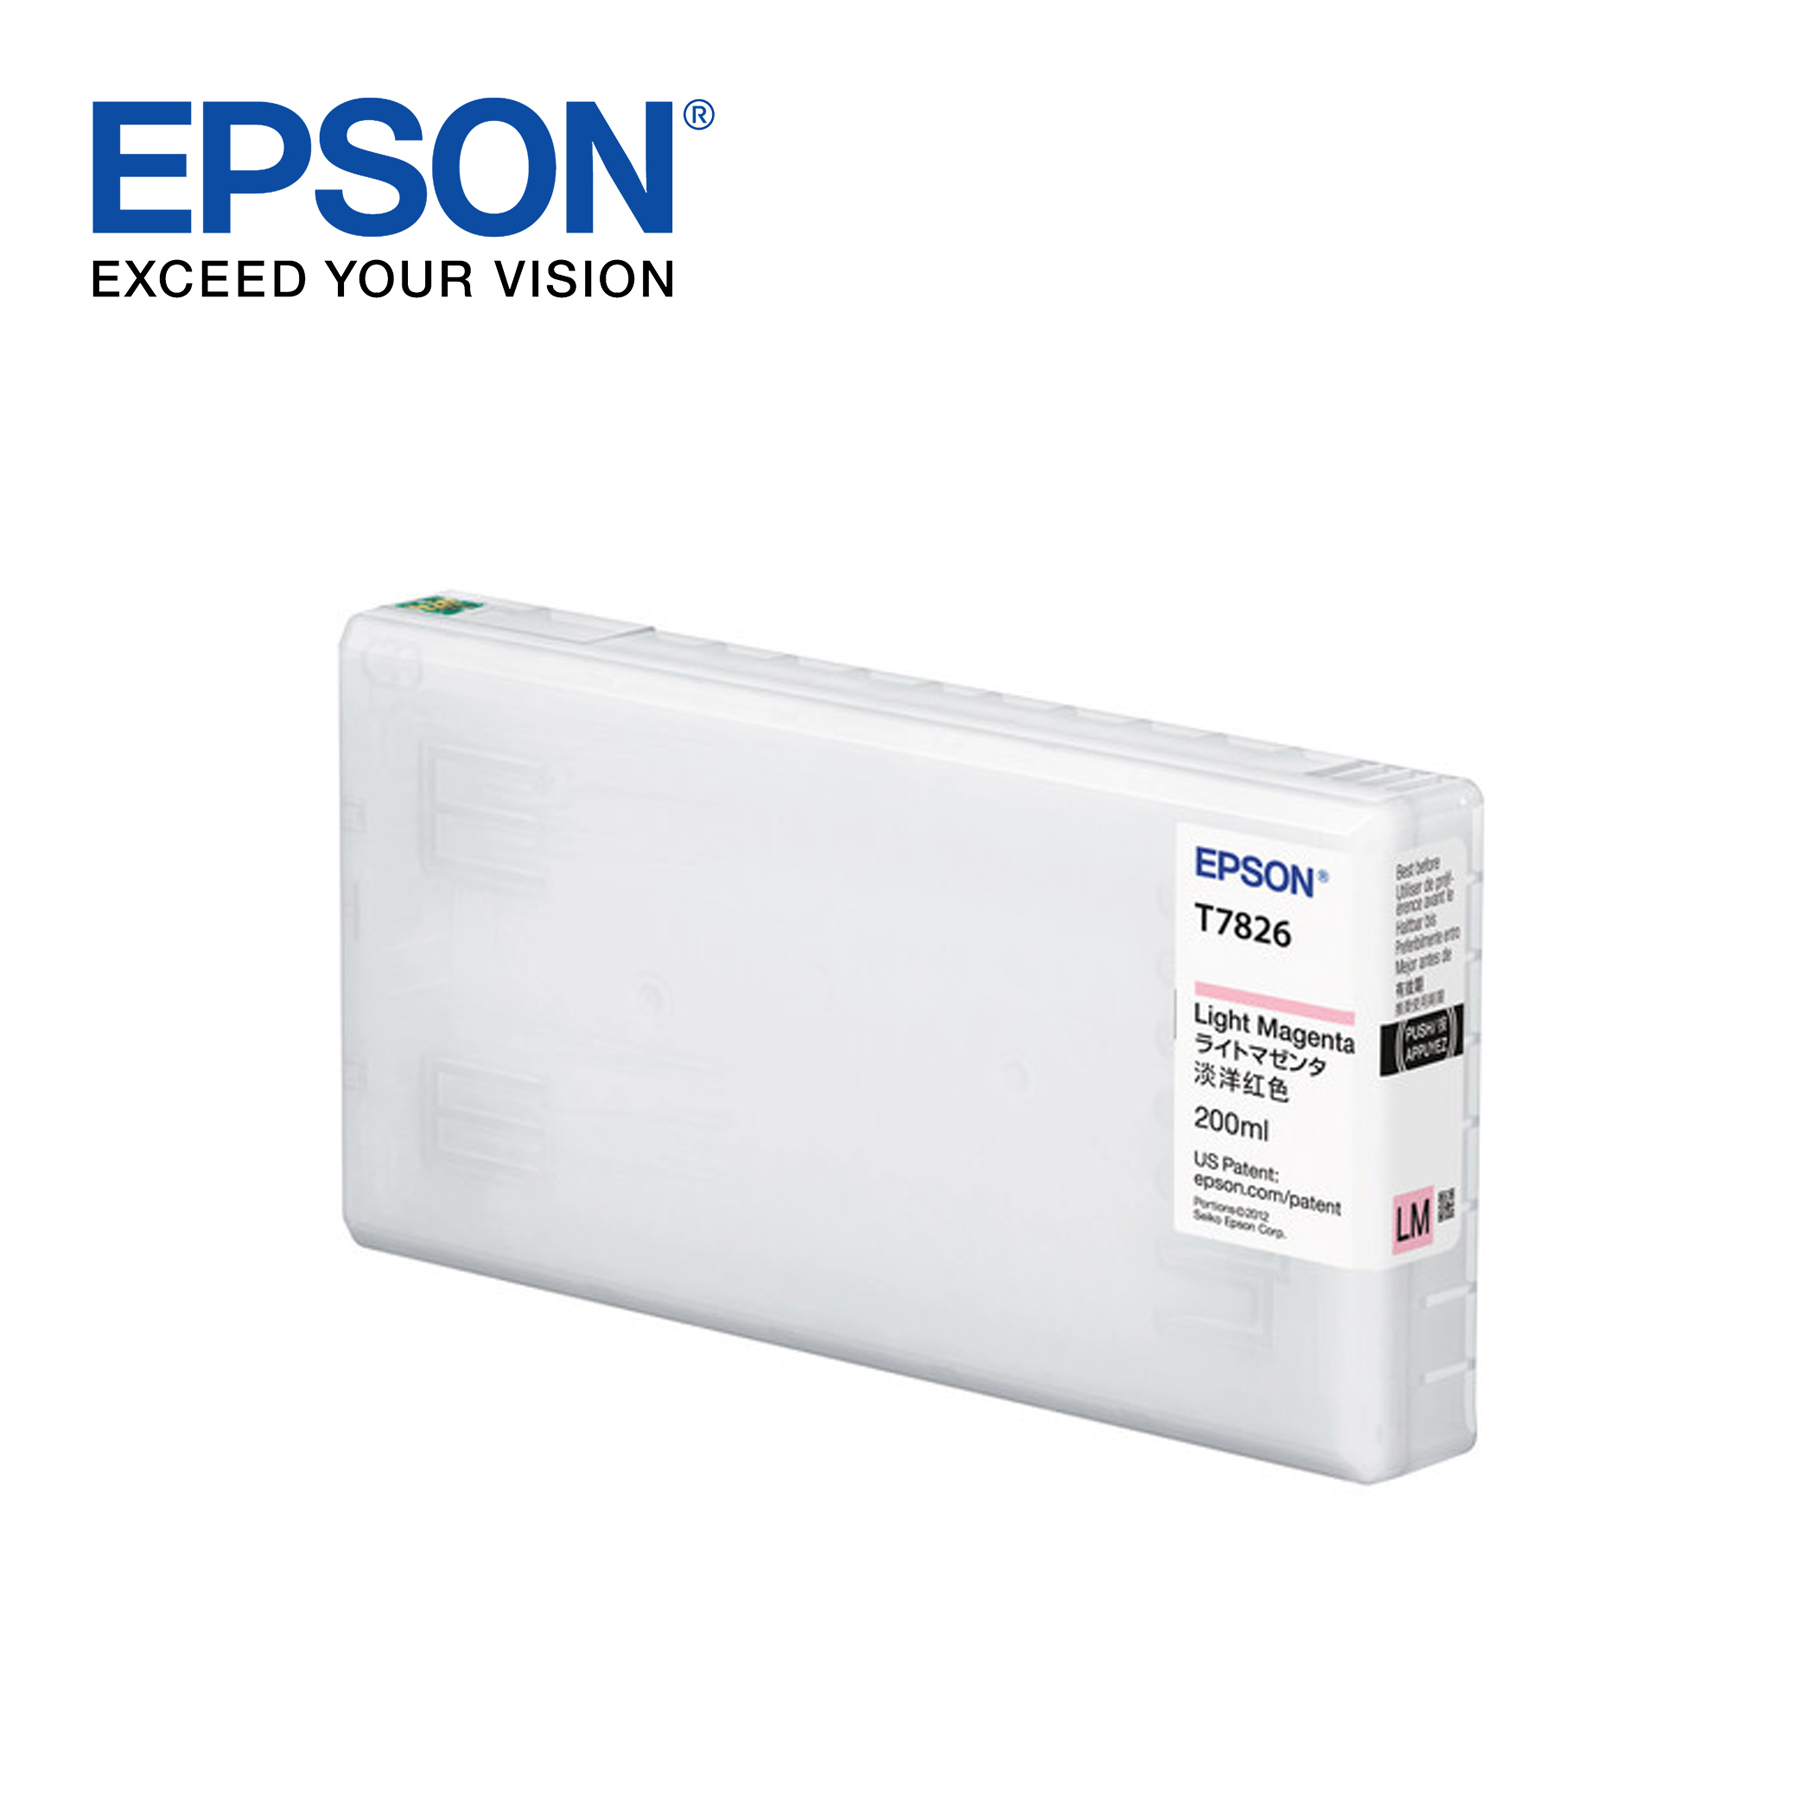 Epson Ink Cartridge for Surelab SL-D700 Photo Printer – Light Magenta